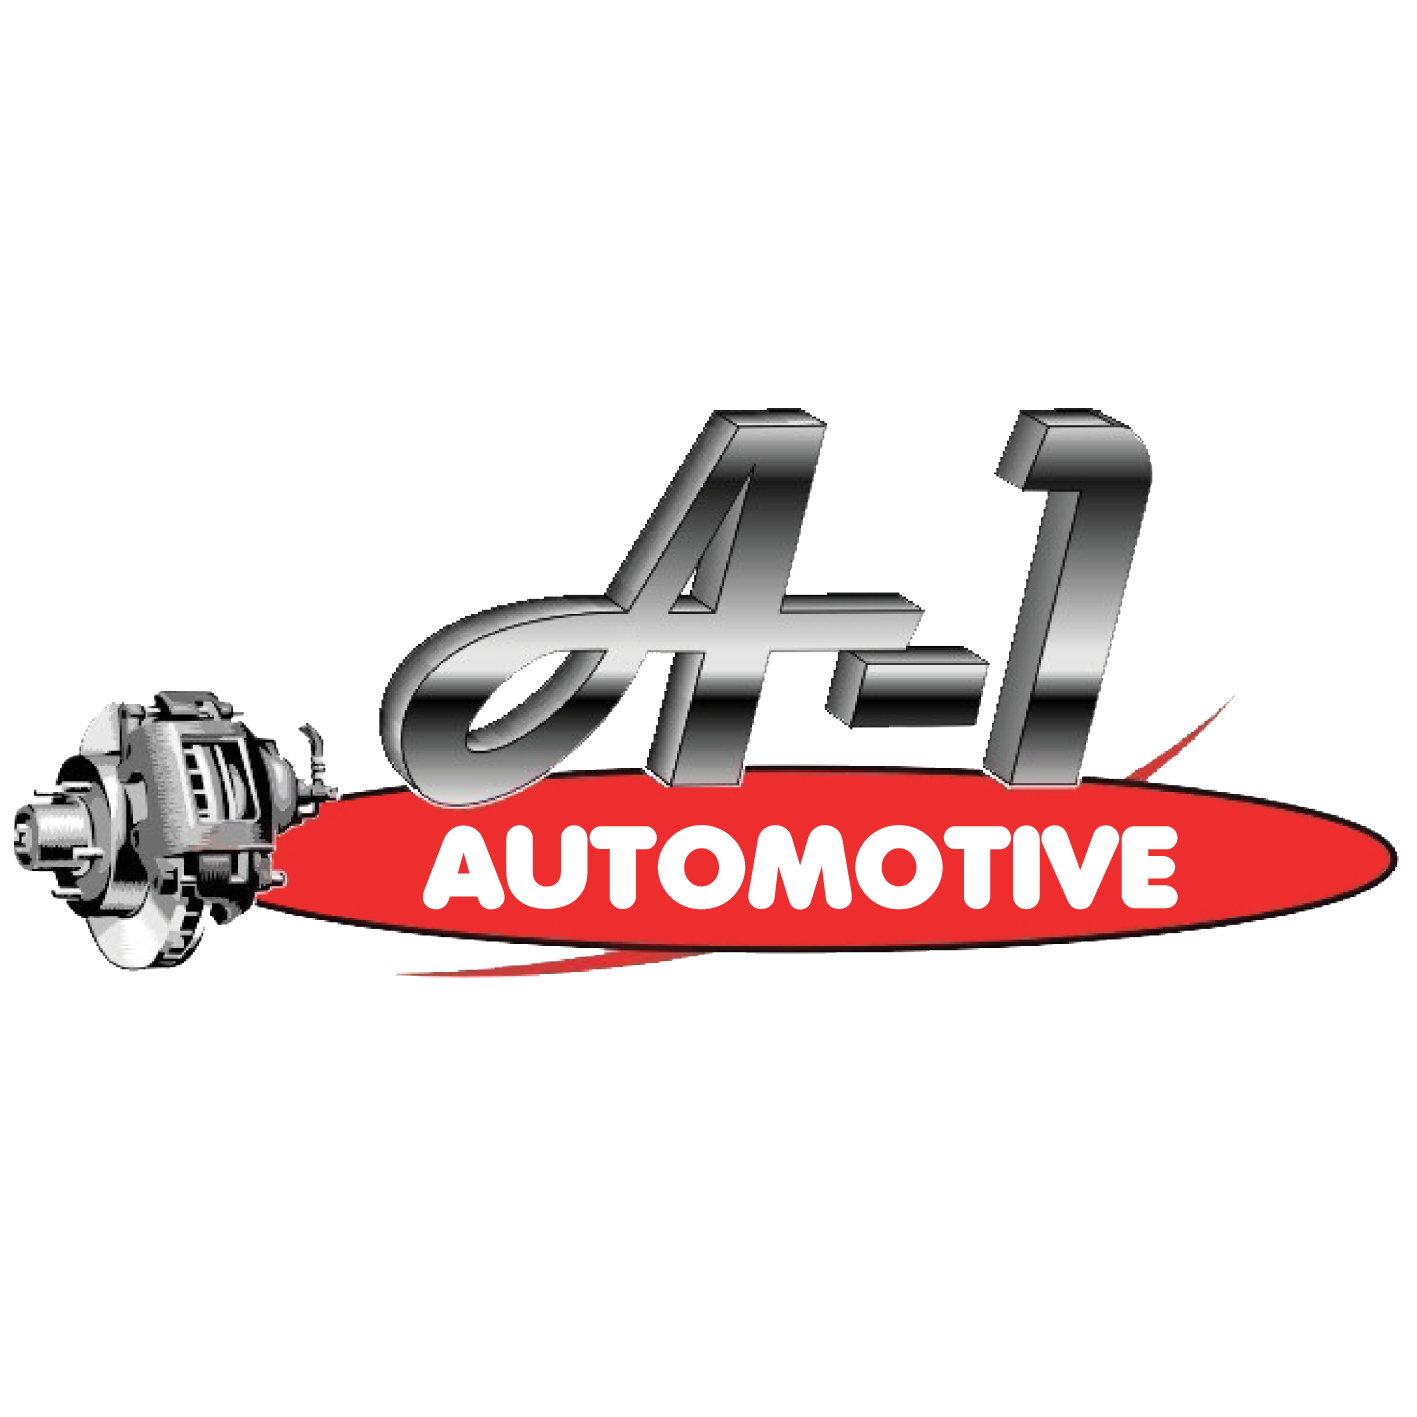 A-1 Automotive